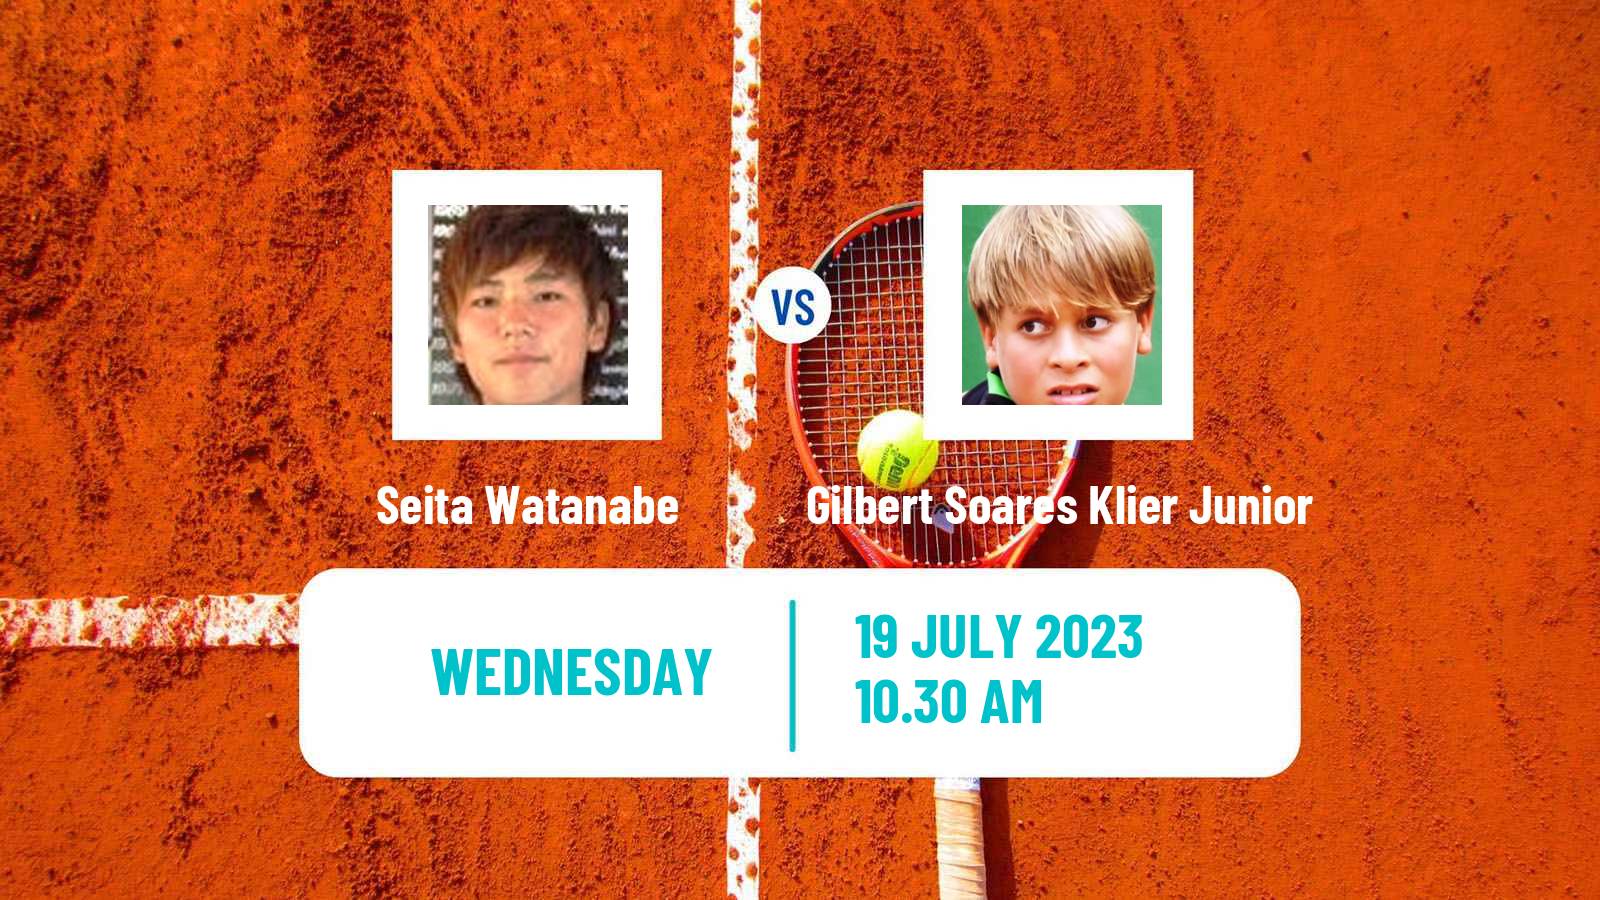 Tennis ITF M15 Monastir 29 Men Seita Watanabe - Gilbert Soares Klier Junior